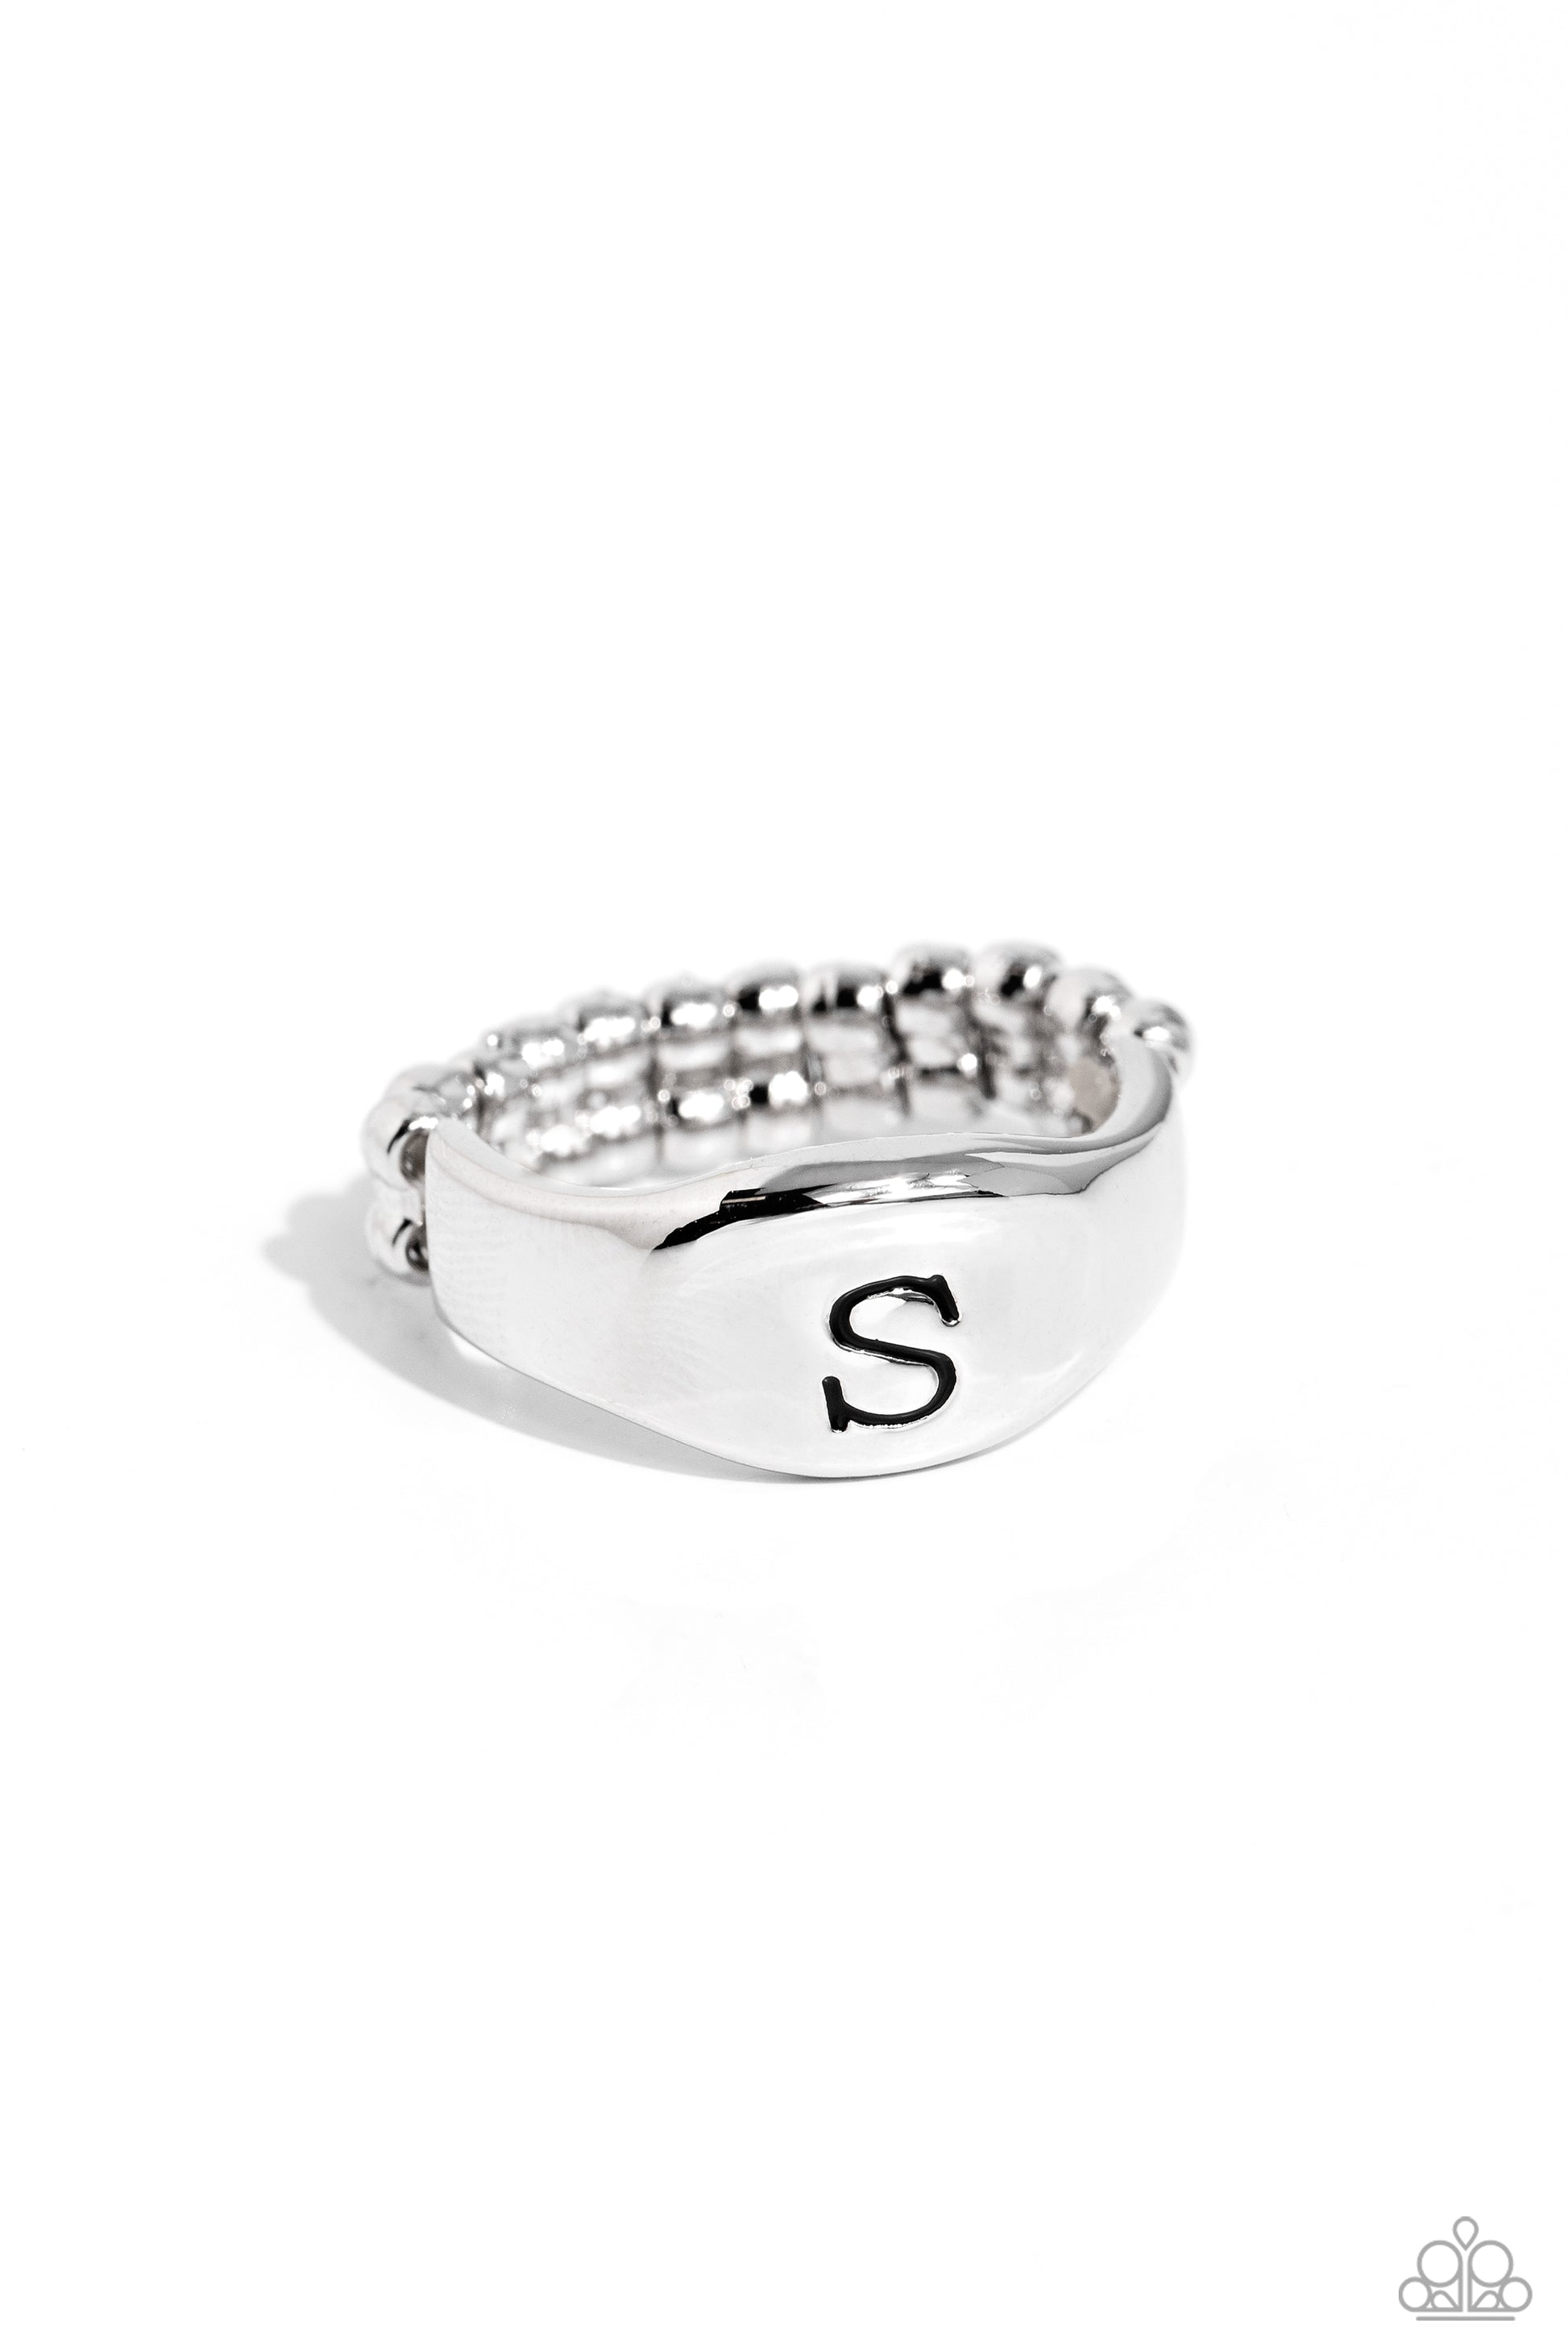 Monogram Memento - silver - S - Paparazzi ring